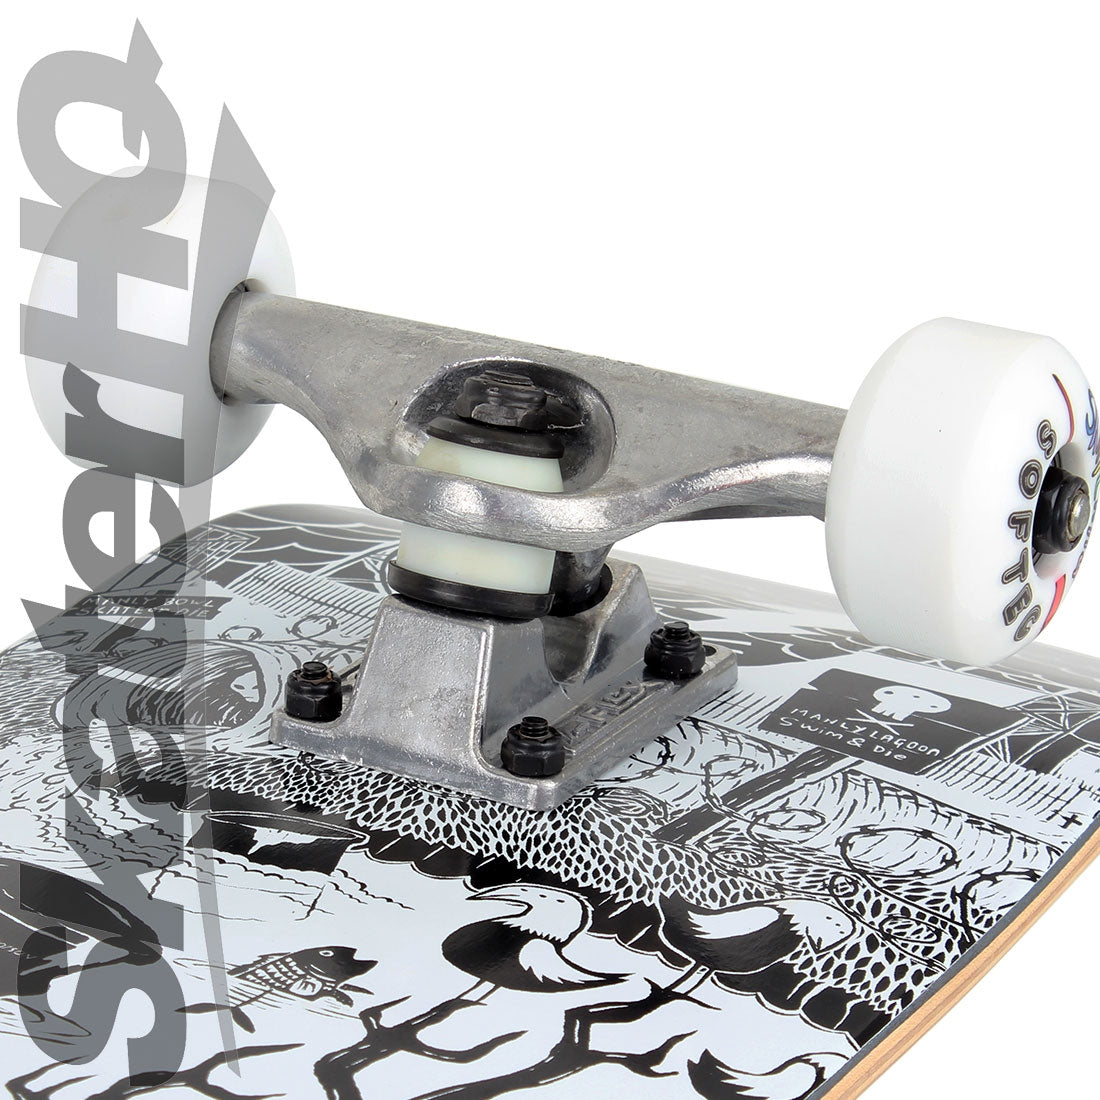 Skater HQ Manly Lagoon 7.25 Mini S Complete Skateboard Completes Modern Street